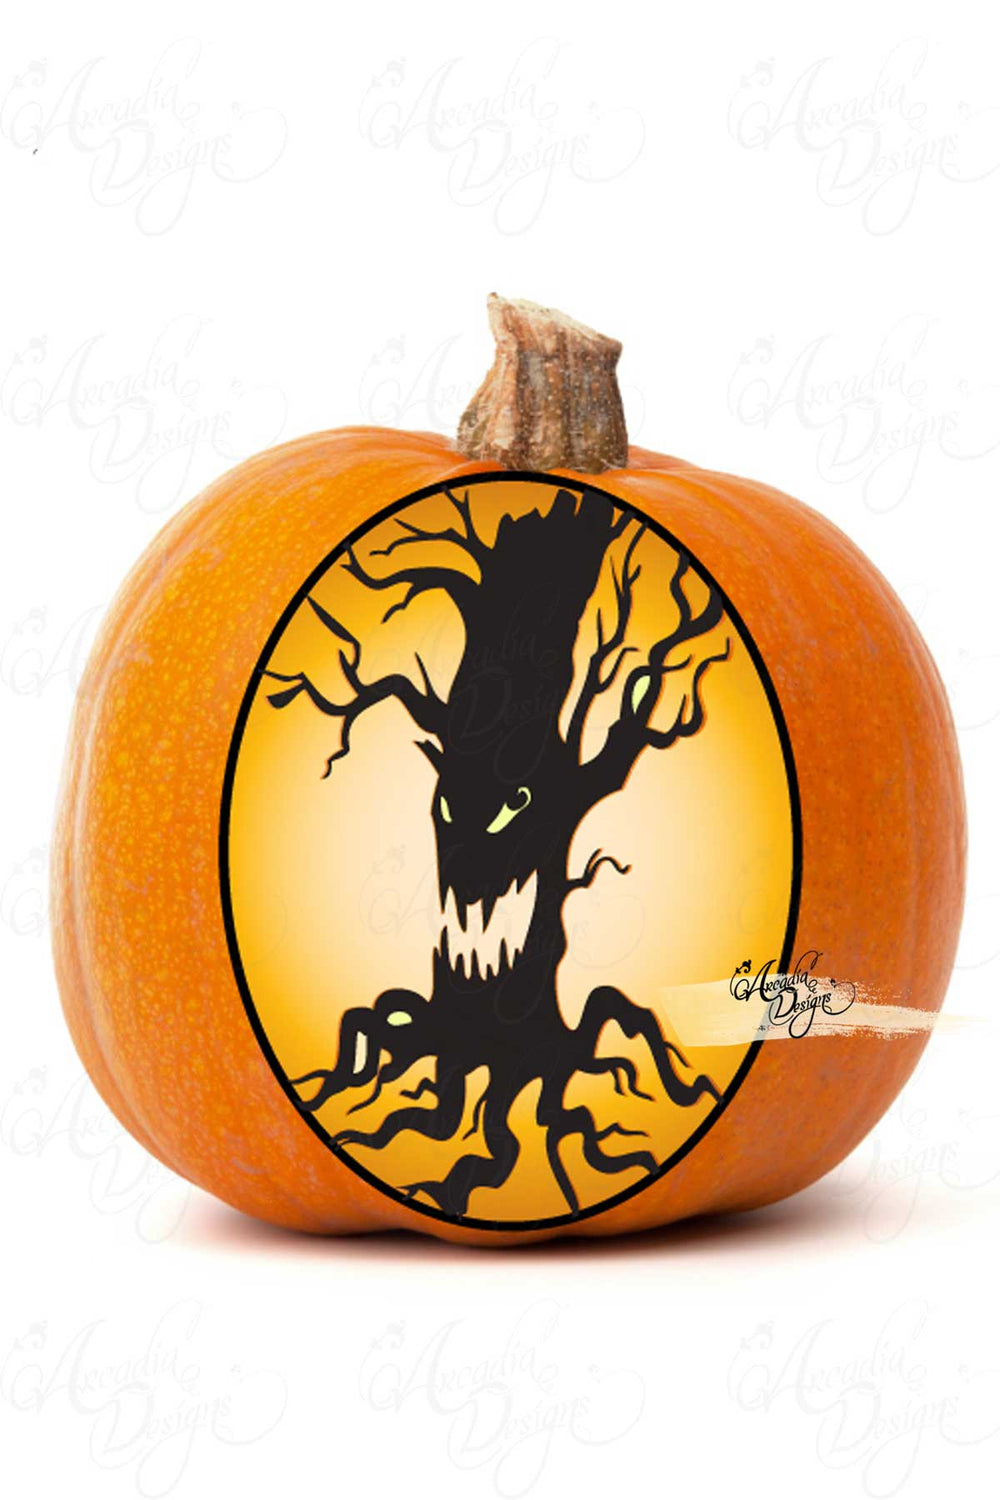 pumpkin carving ideas tree